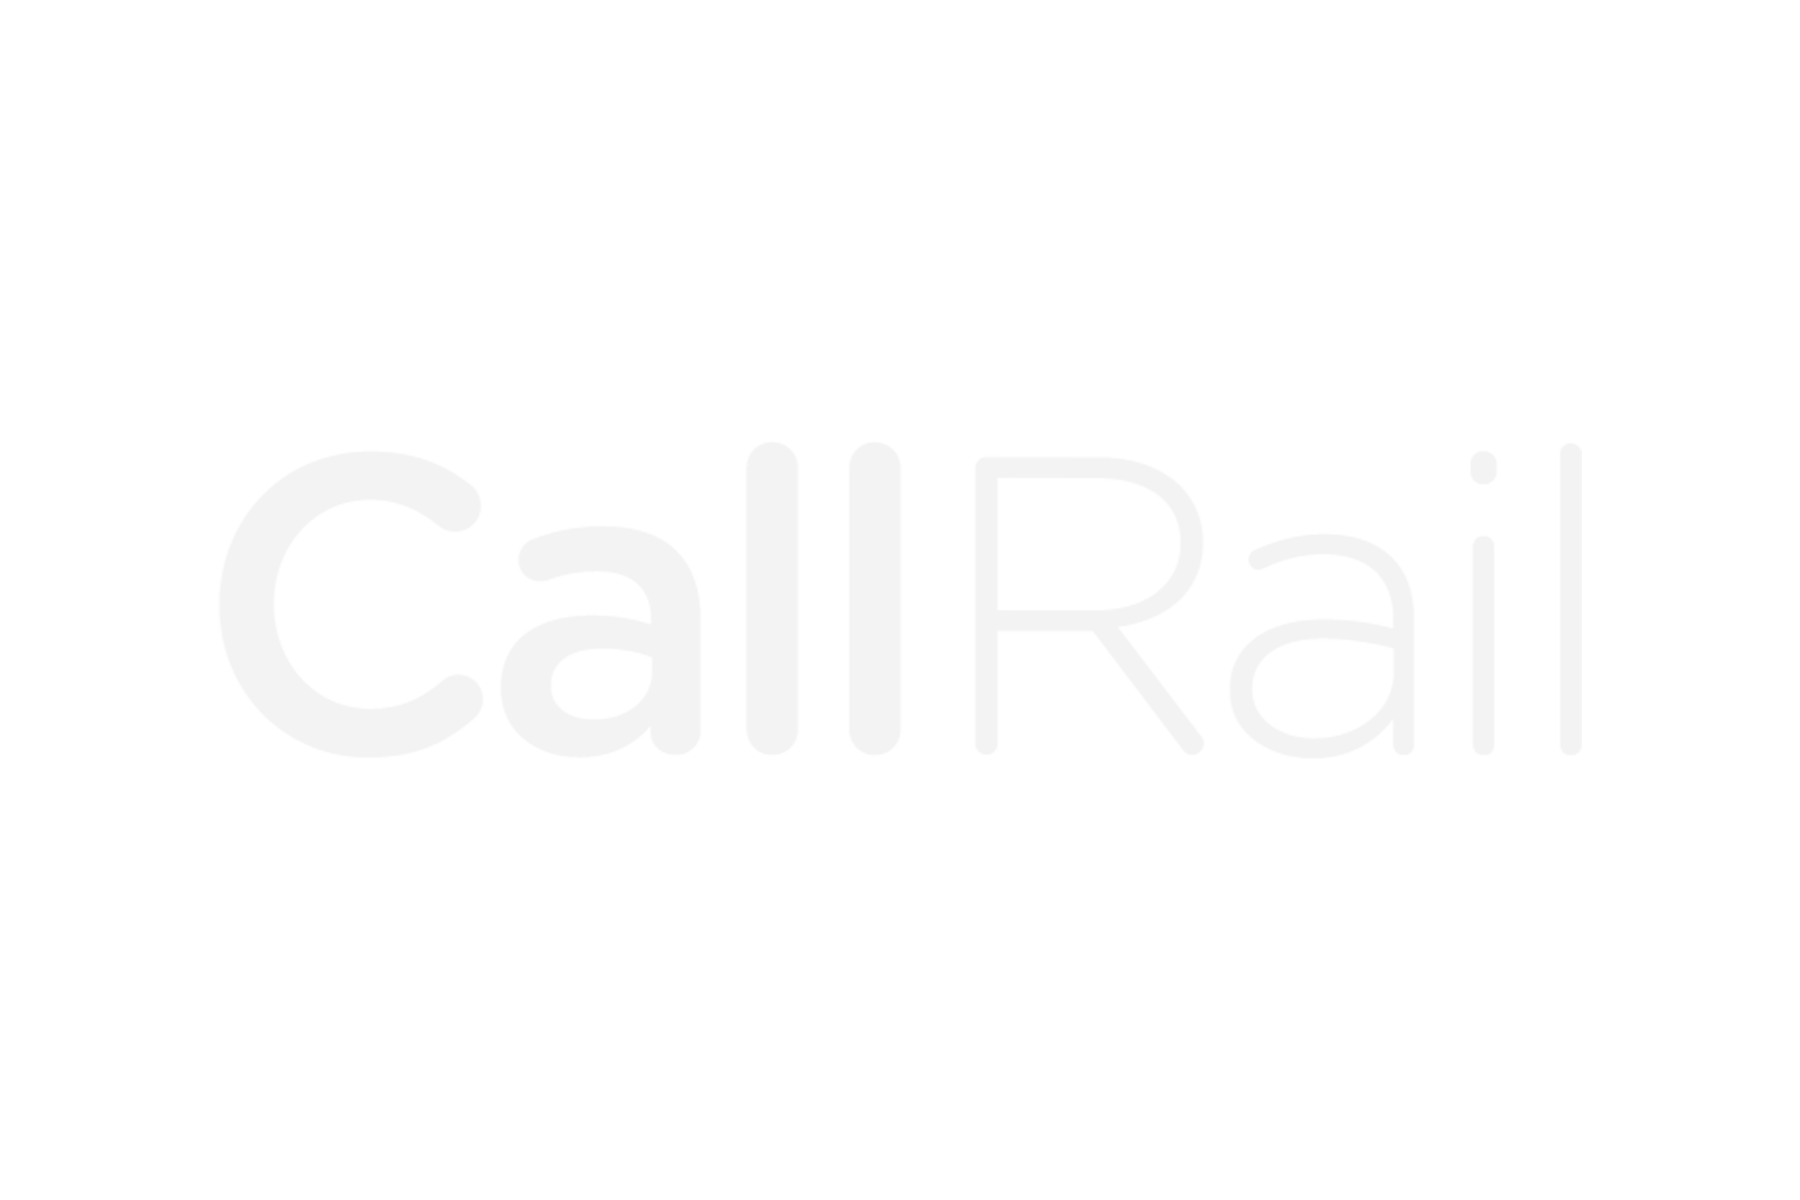 Call Rail (Copy)